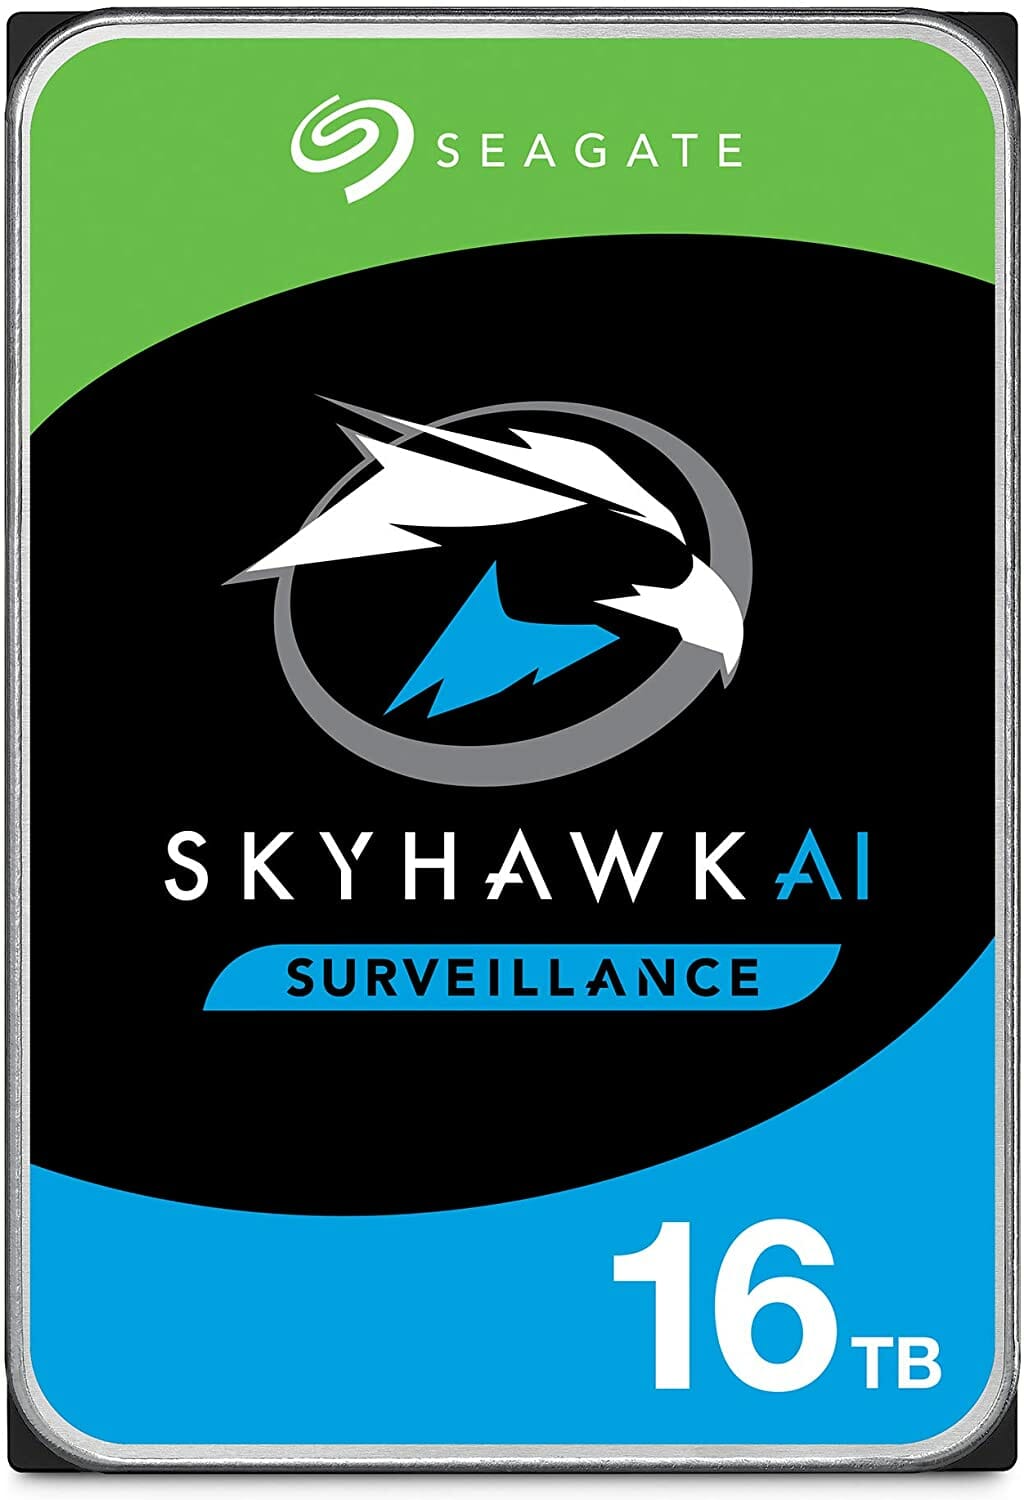 Seagate Skyhawk Ai 16tb Sata 256mb 3.5 7200rpm ST16000VE000